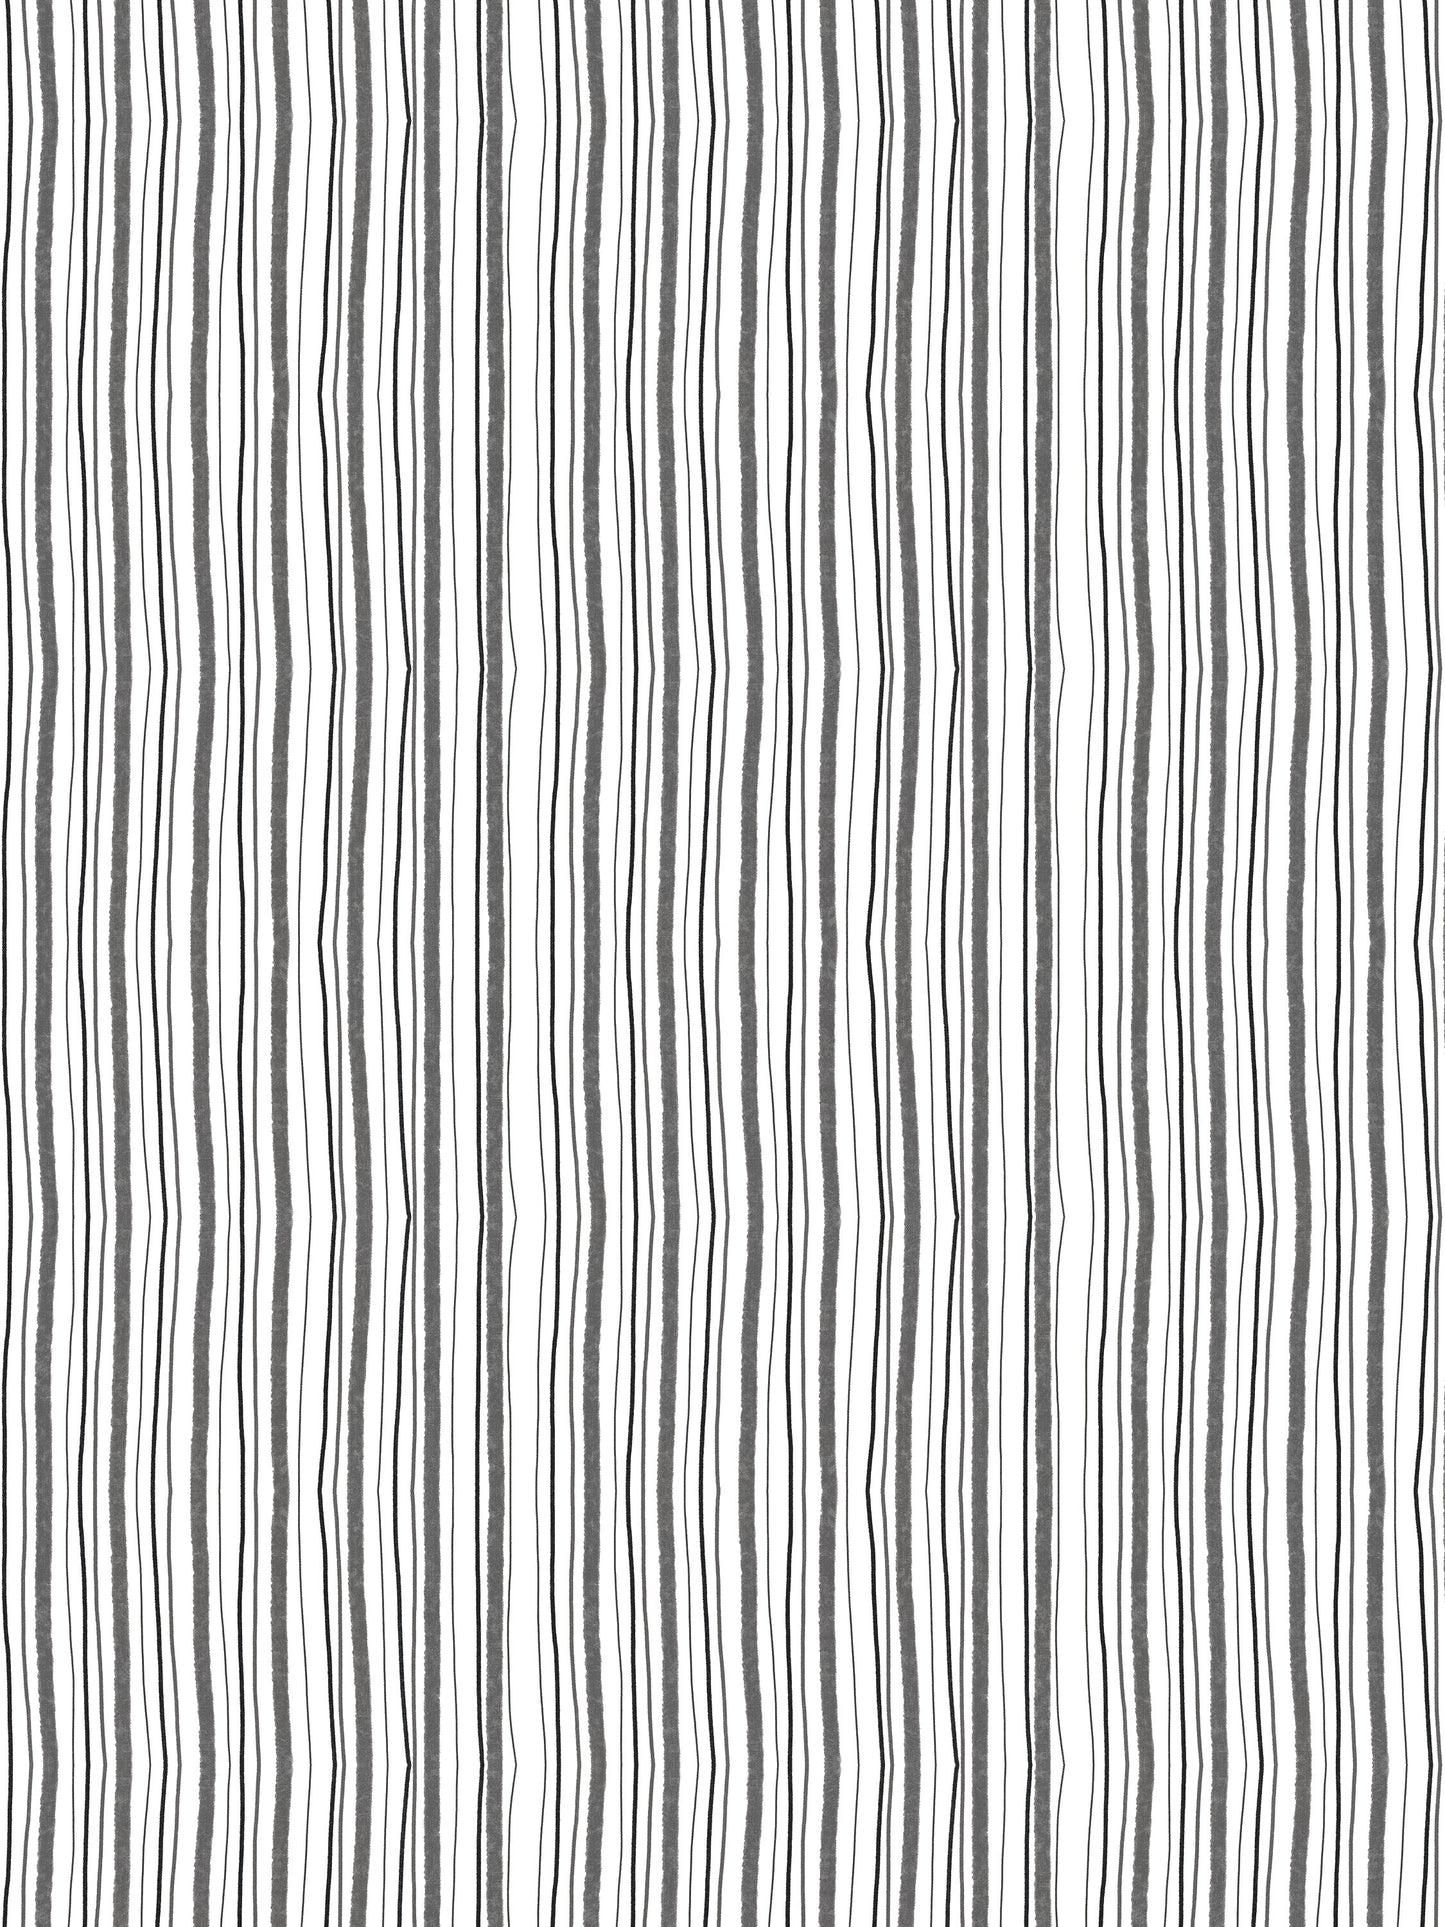 Wobbly Stripe Black and White